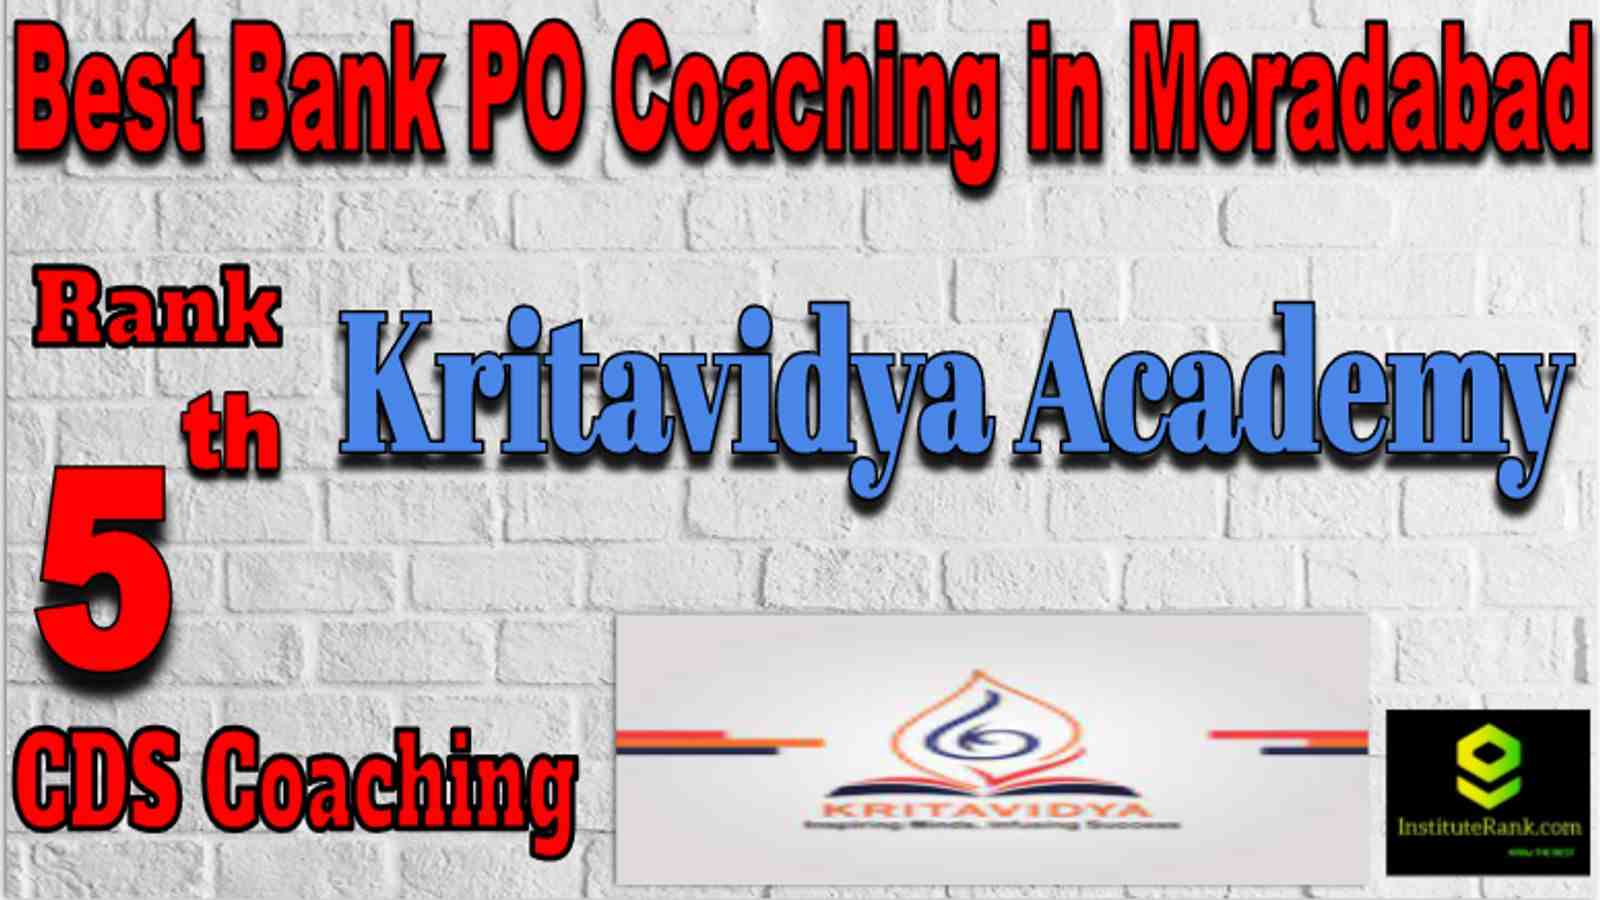 Rank 5 Top Bank PO Coaching in Mysore